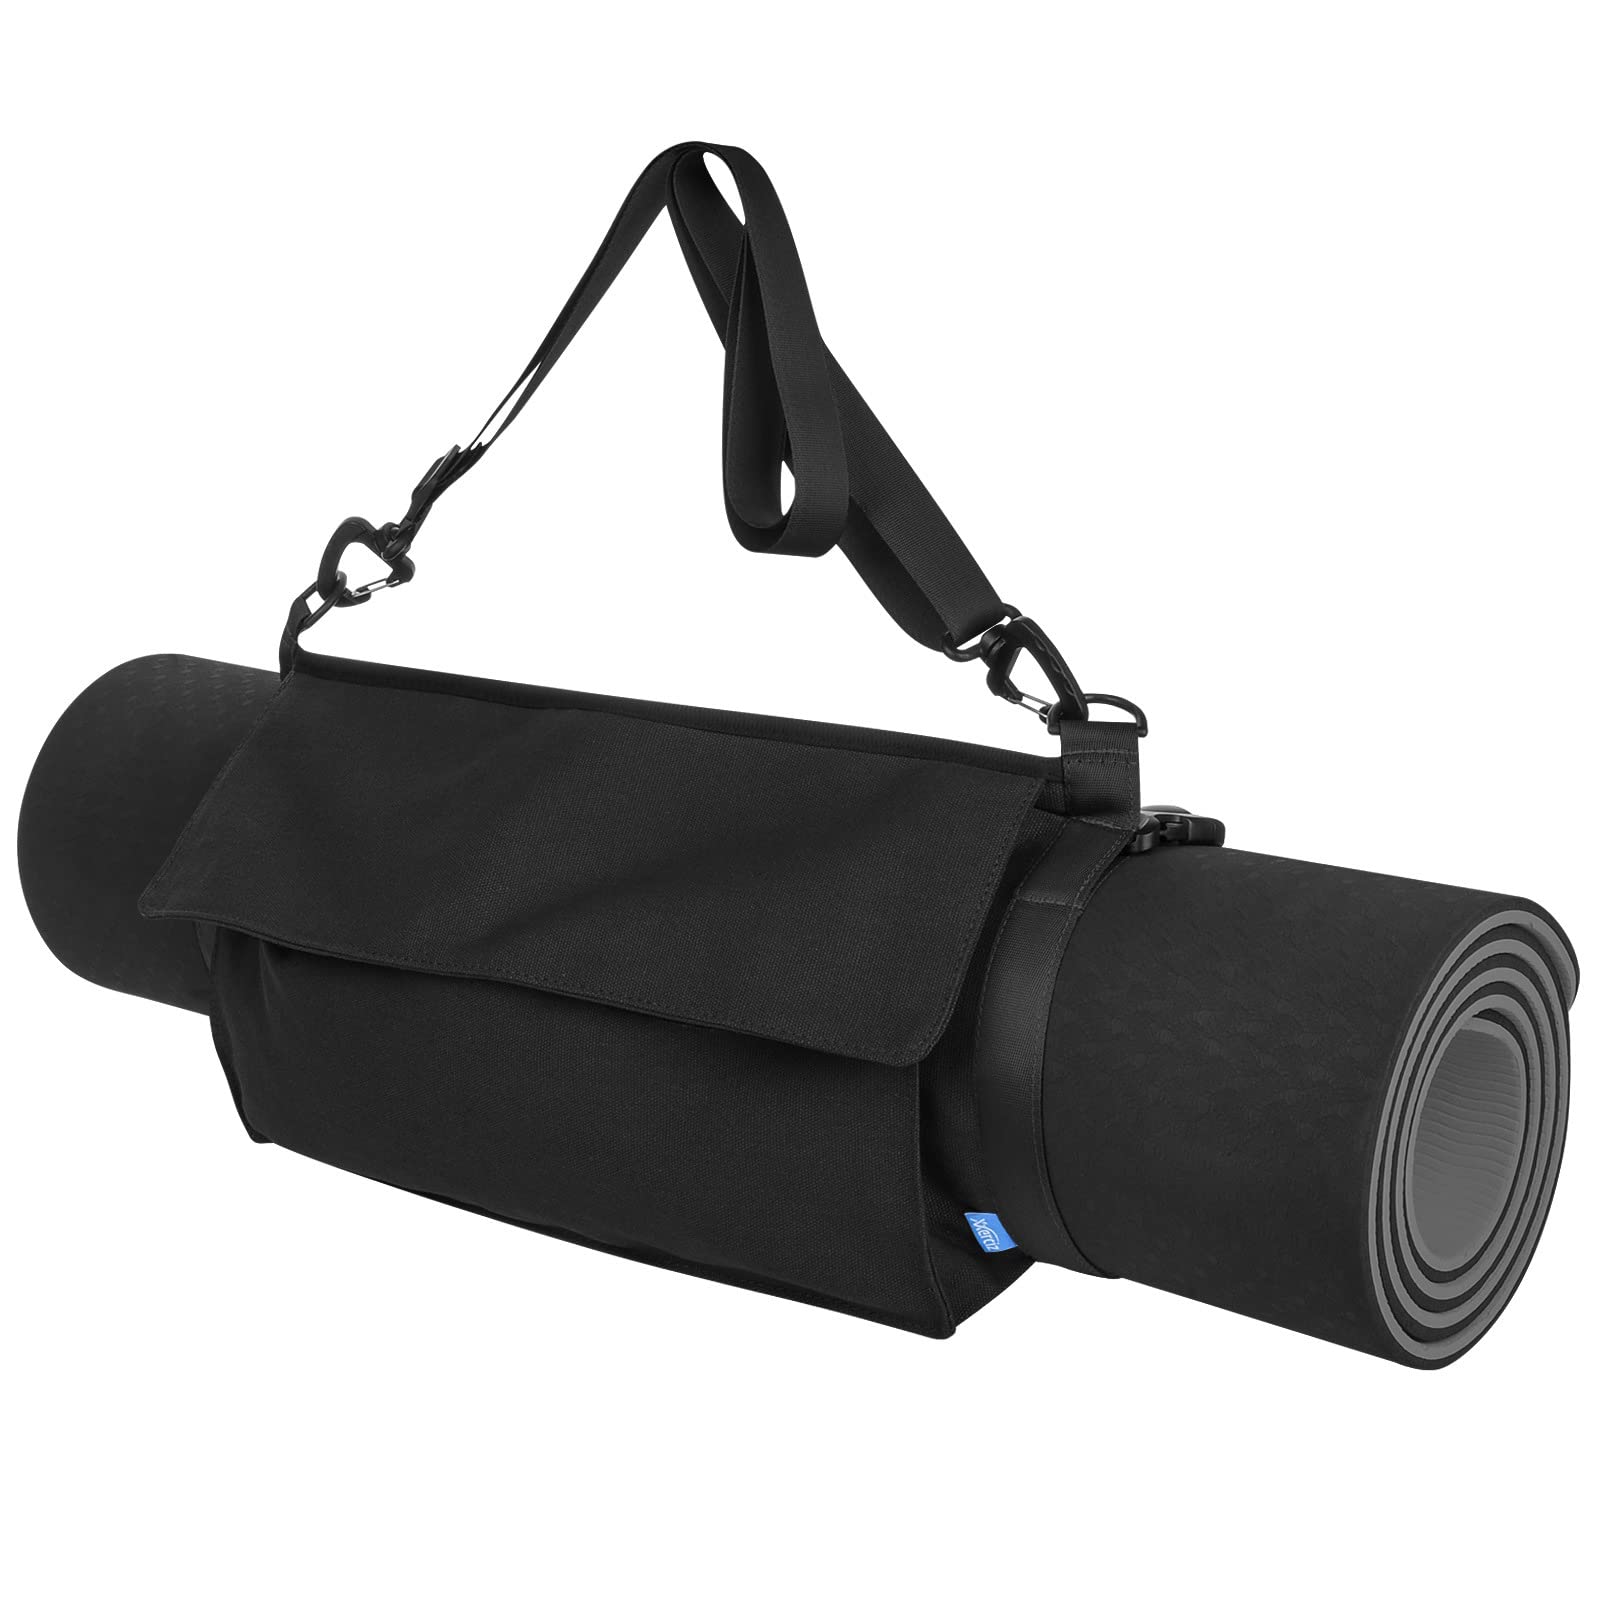 CAMSTIC Yoga Mat Carrier Strap Shoulder Bag with Large Compartment